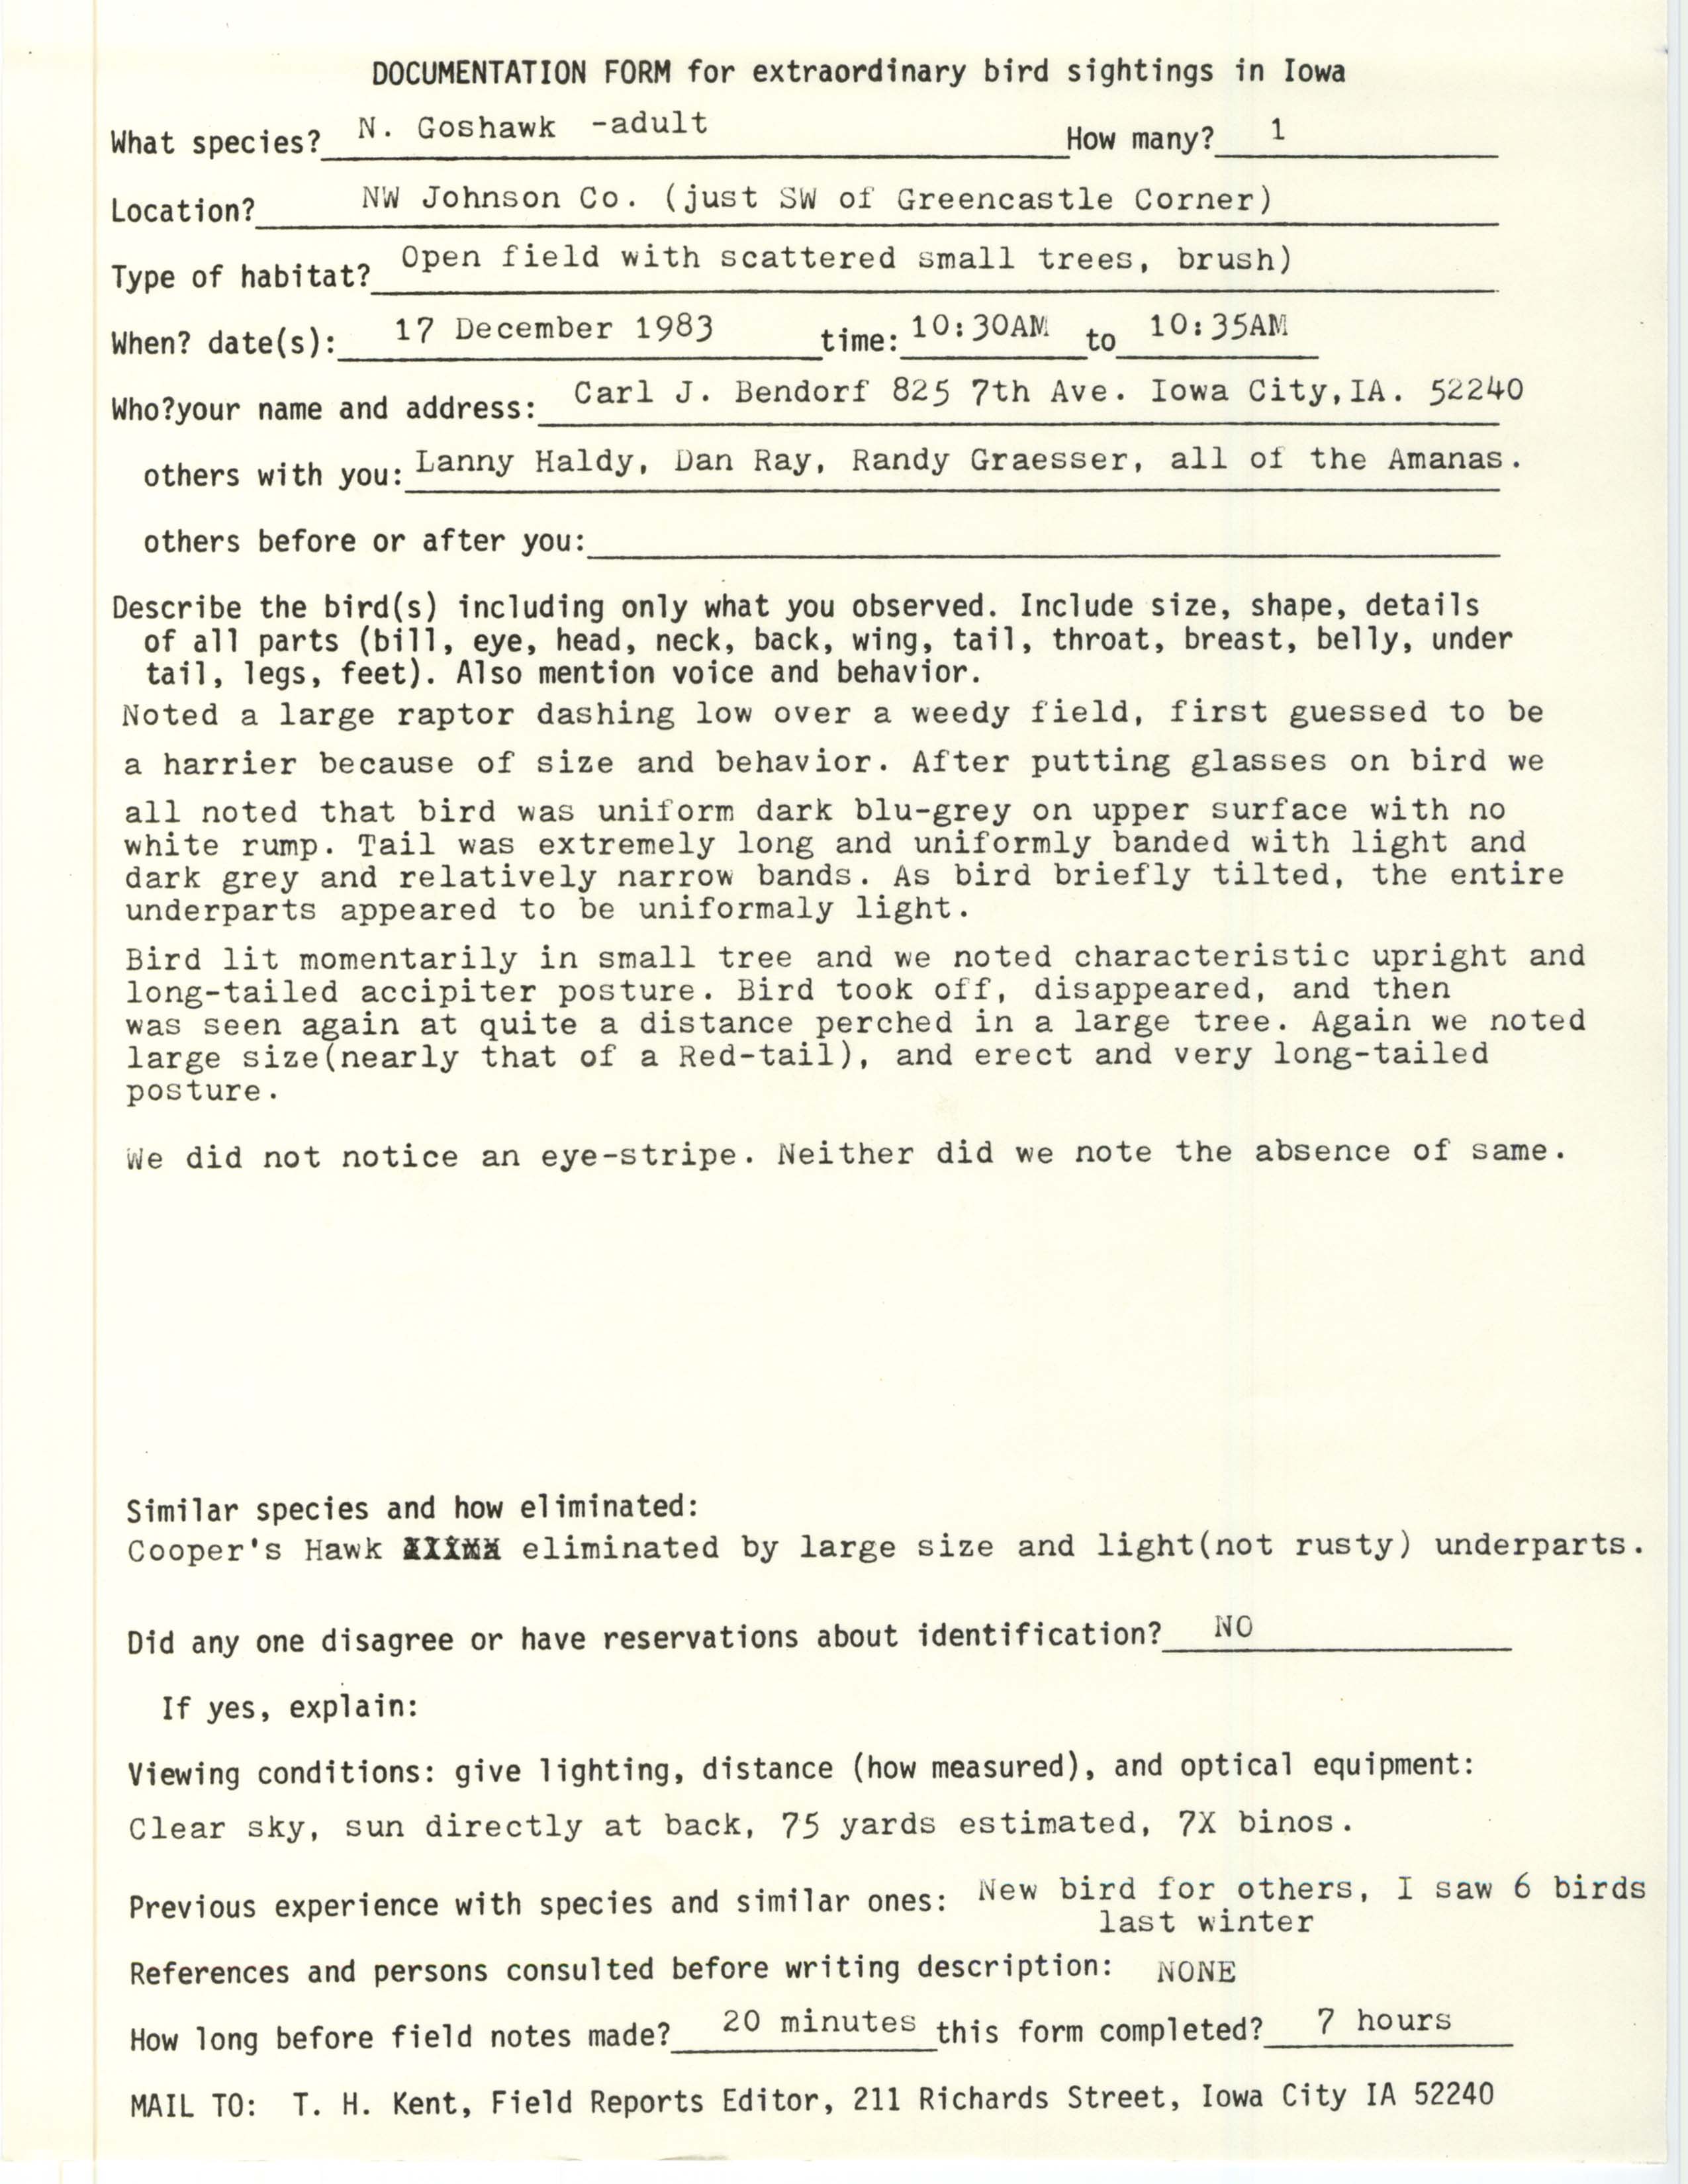 Rare bird documentation form for Northern Goshawk at Green Castle, 1983